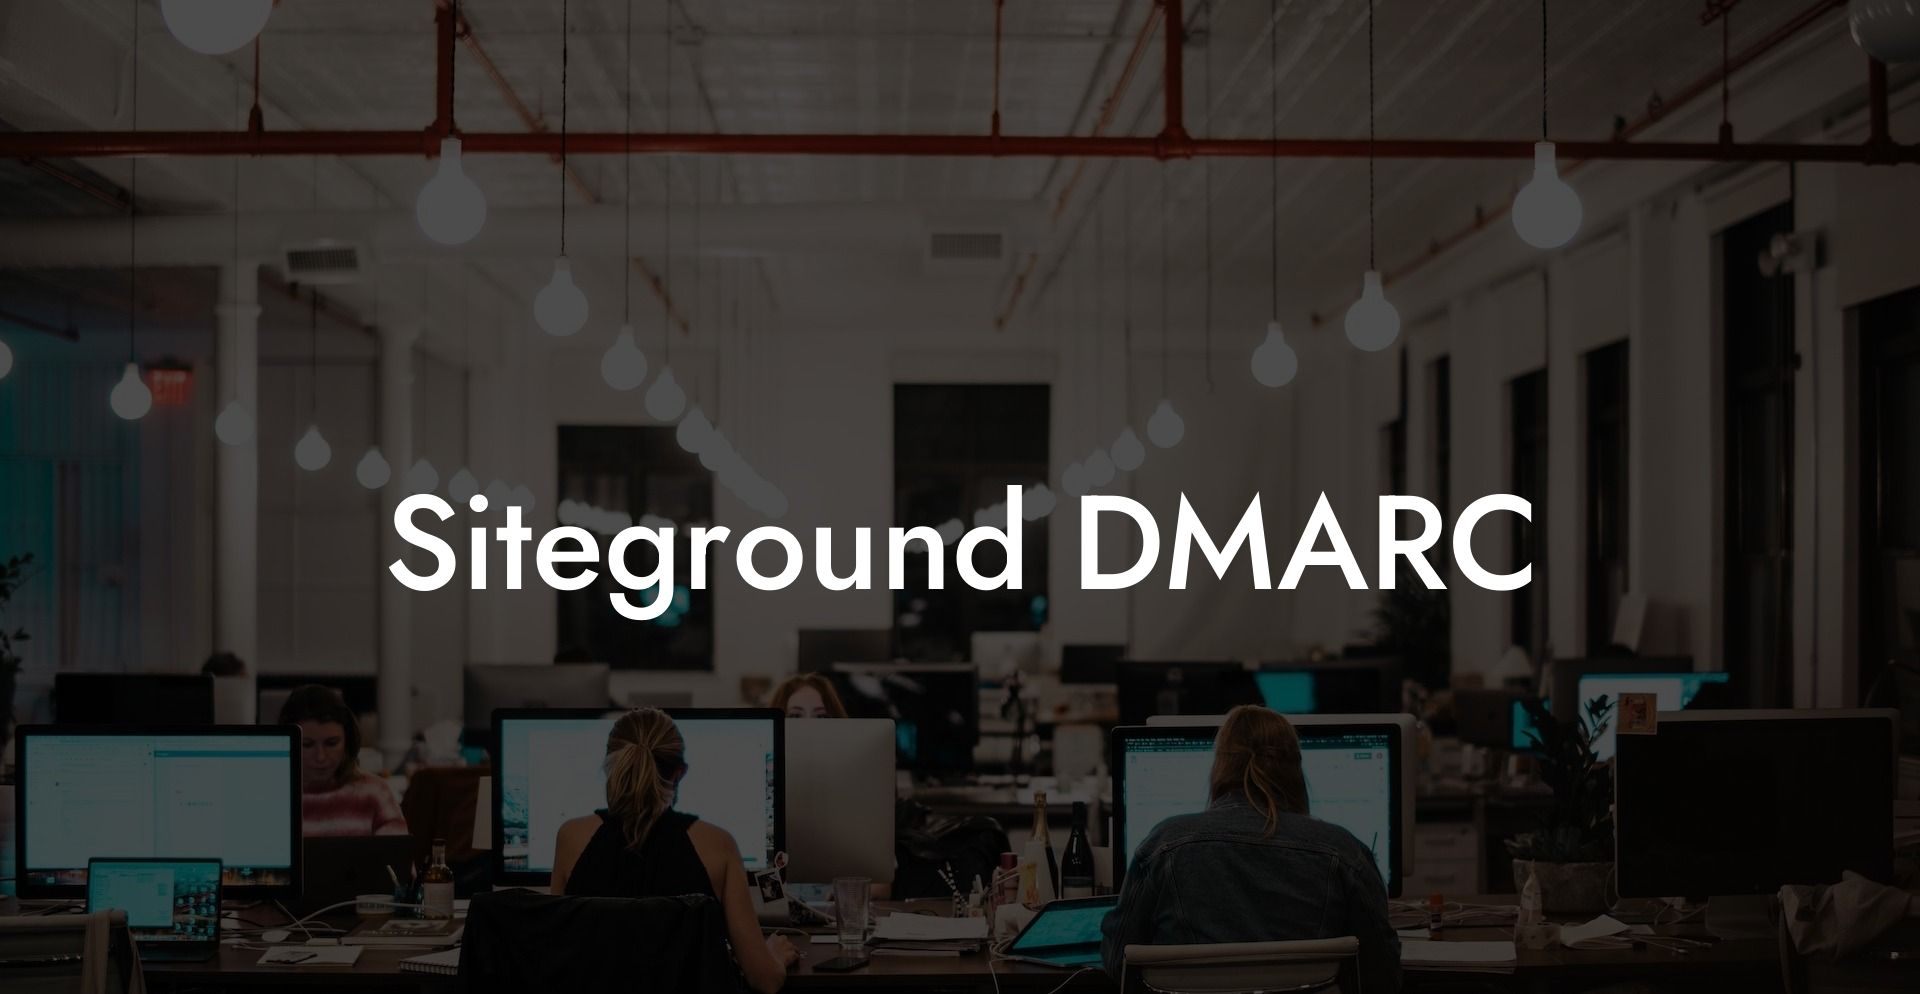 Siteground DMARC